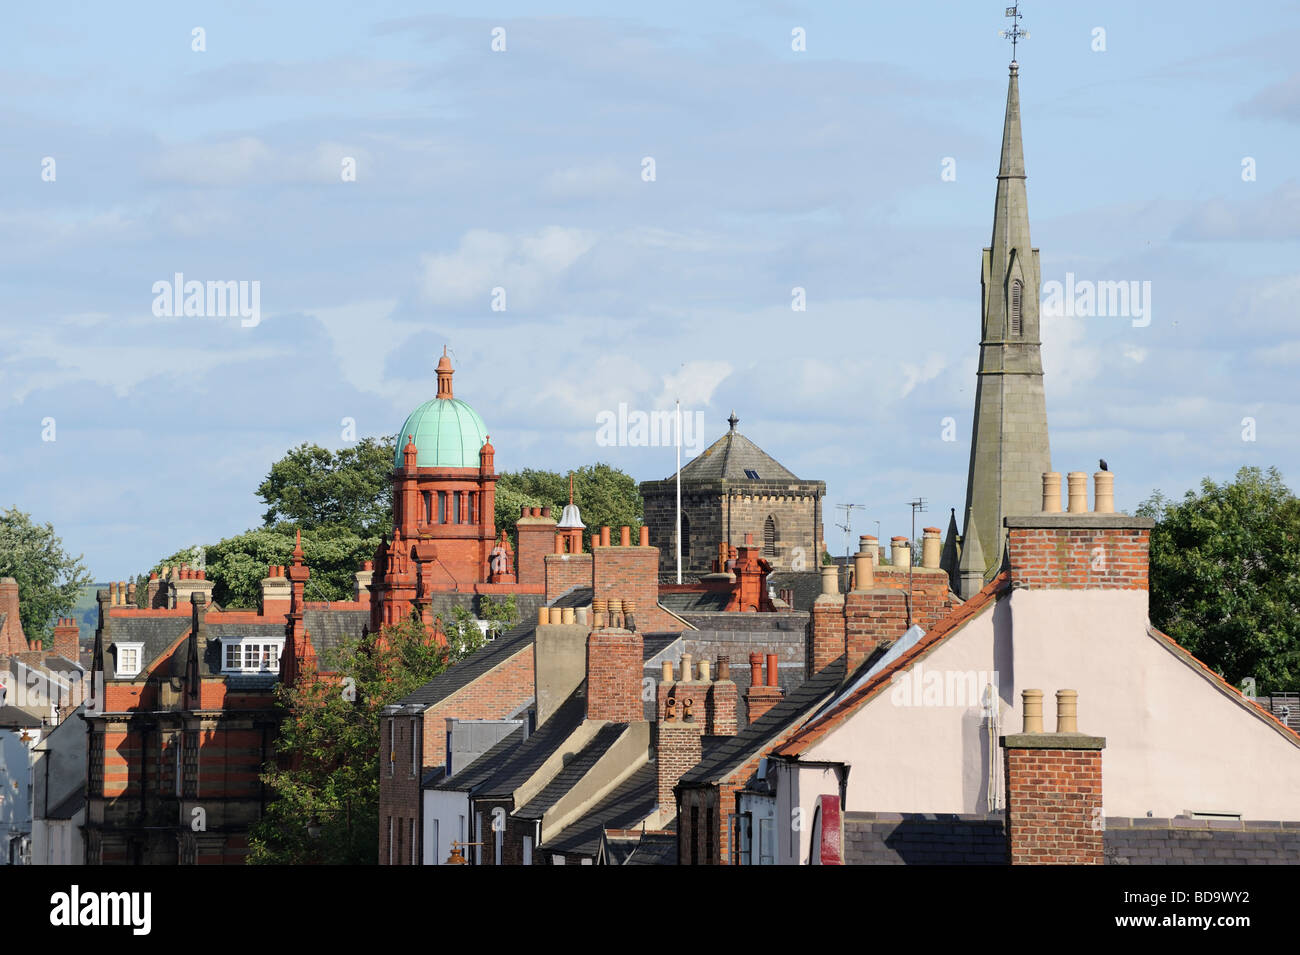 Durham Roof tops Spire Chrurch Old Elvet chimney pots Stock Photo